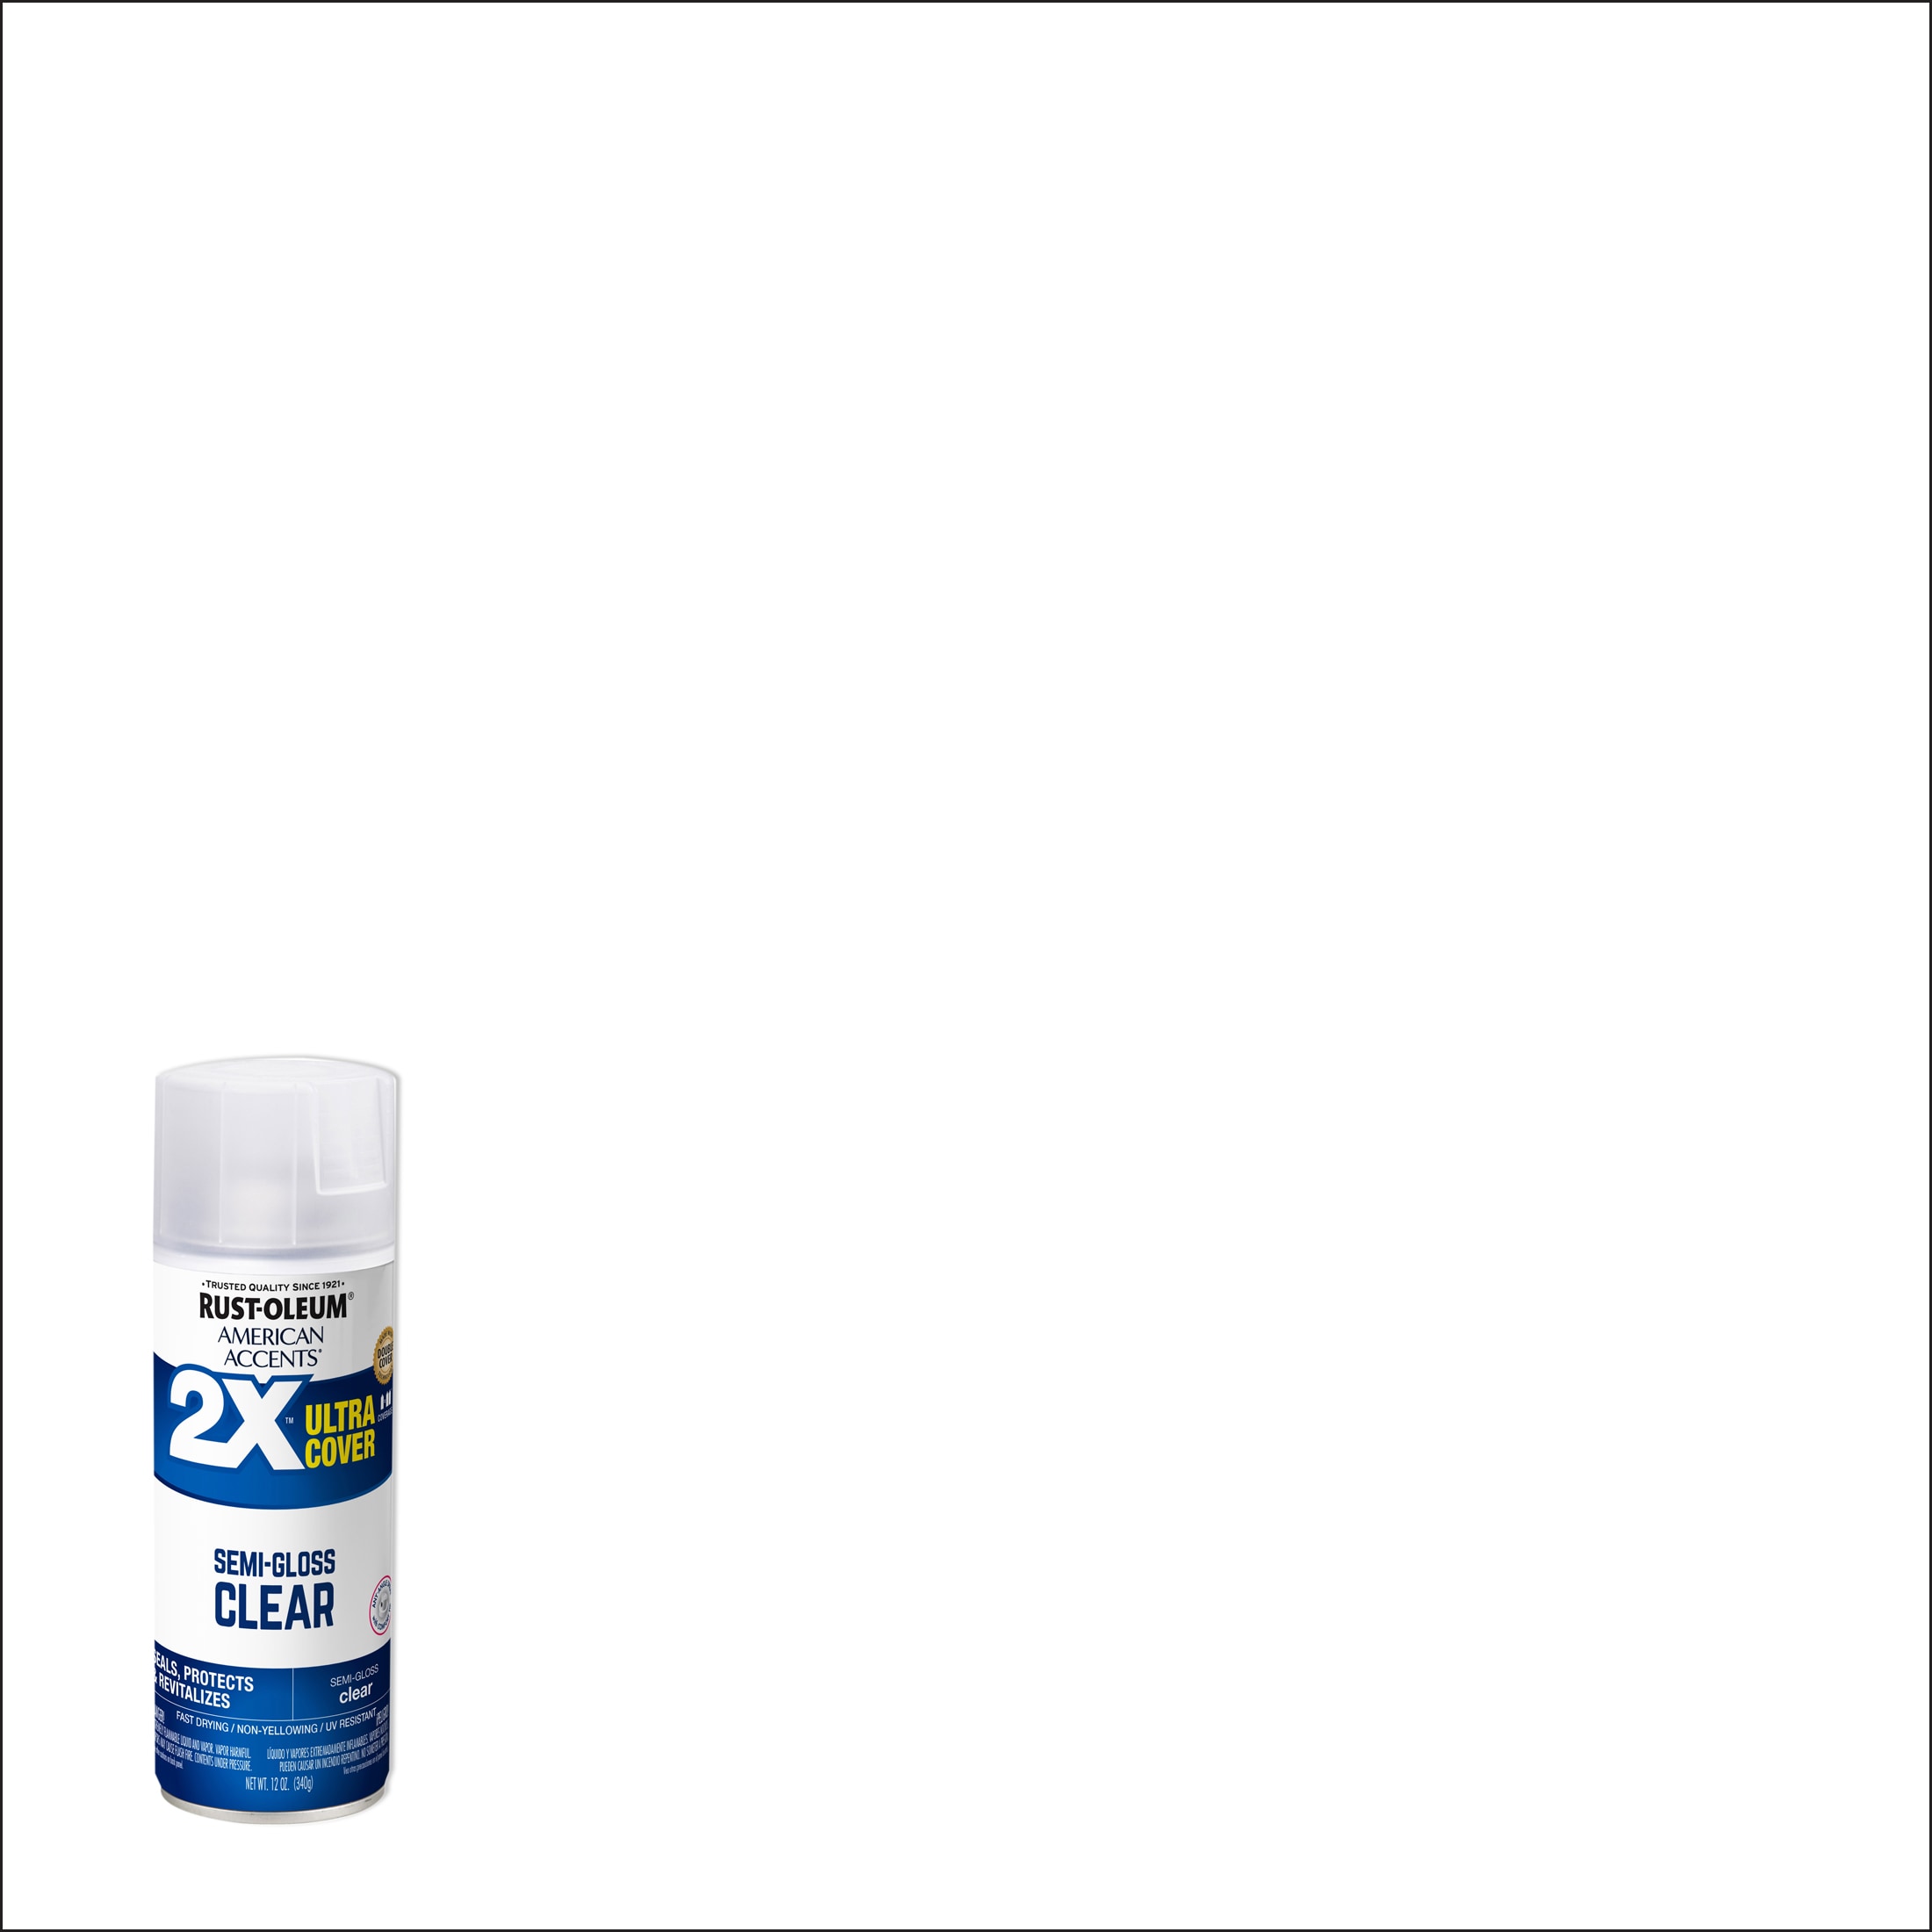 Rust-Oleum® 1932830 Specialty Fluorescent Spray Paint, 12 Oz, Fluoresc –  Toolbox Supply